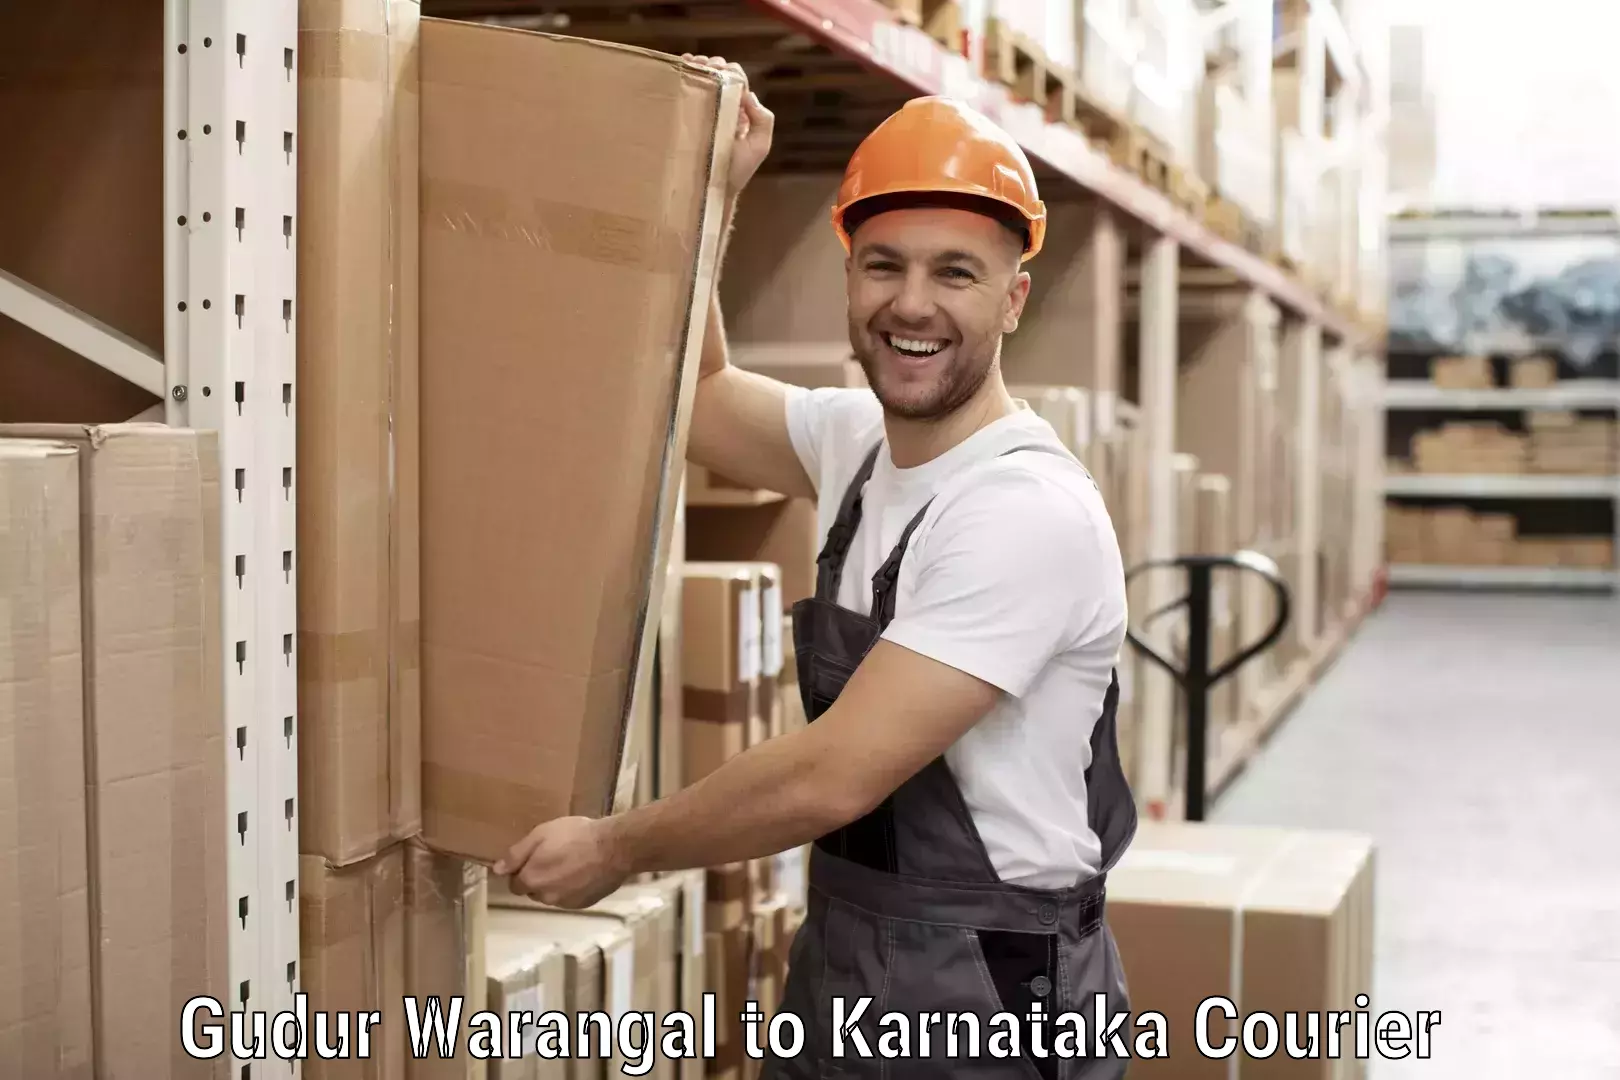 On-demand shipping options Gudur Warangal to Karnataka